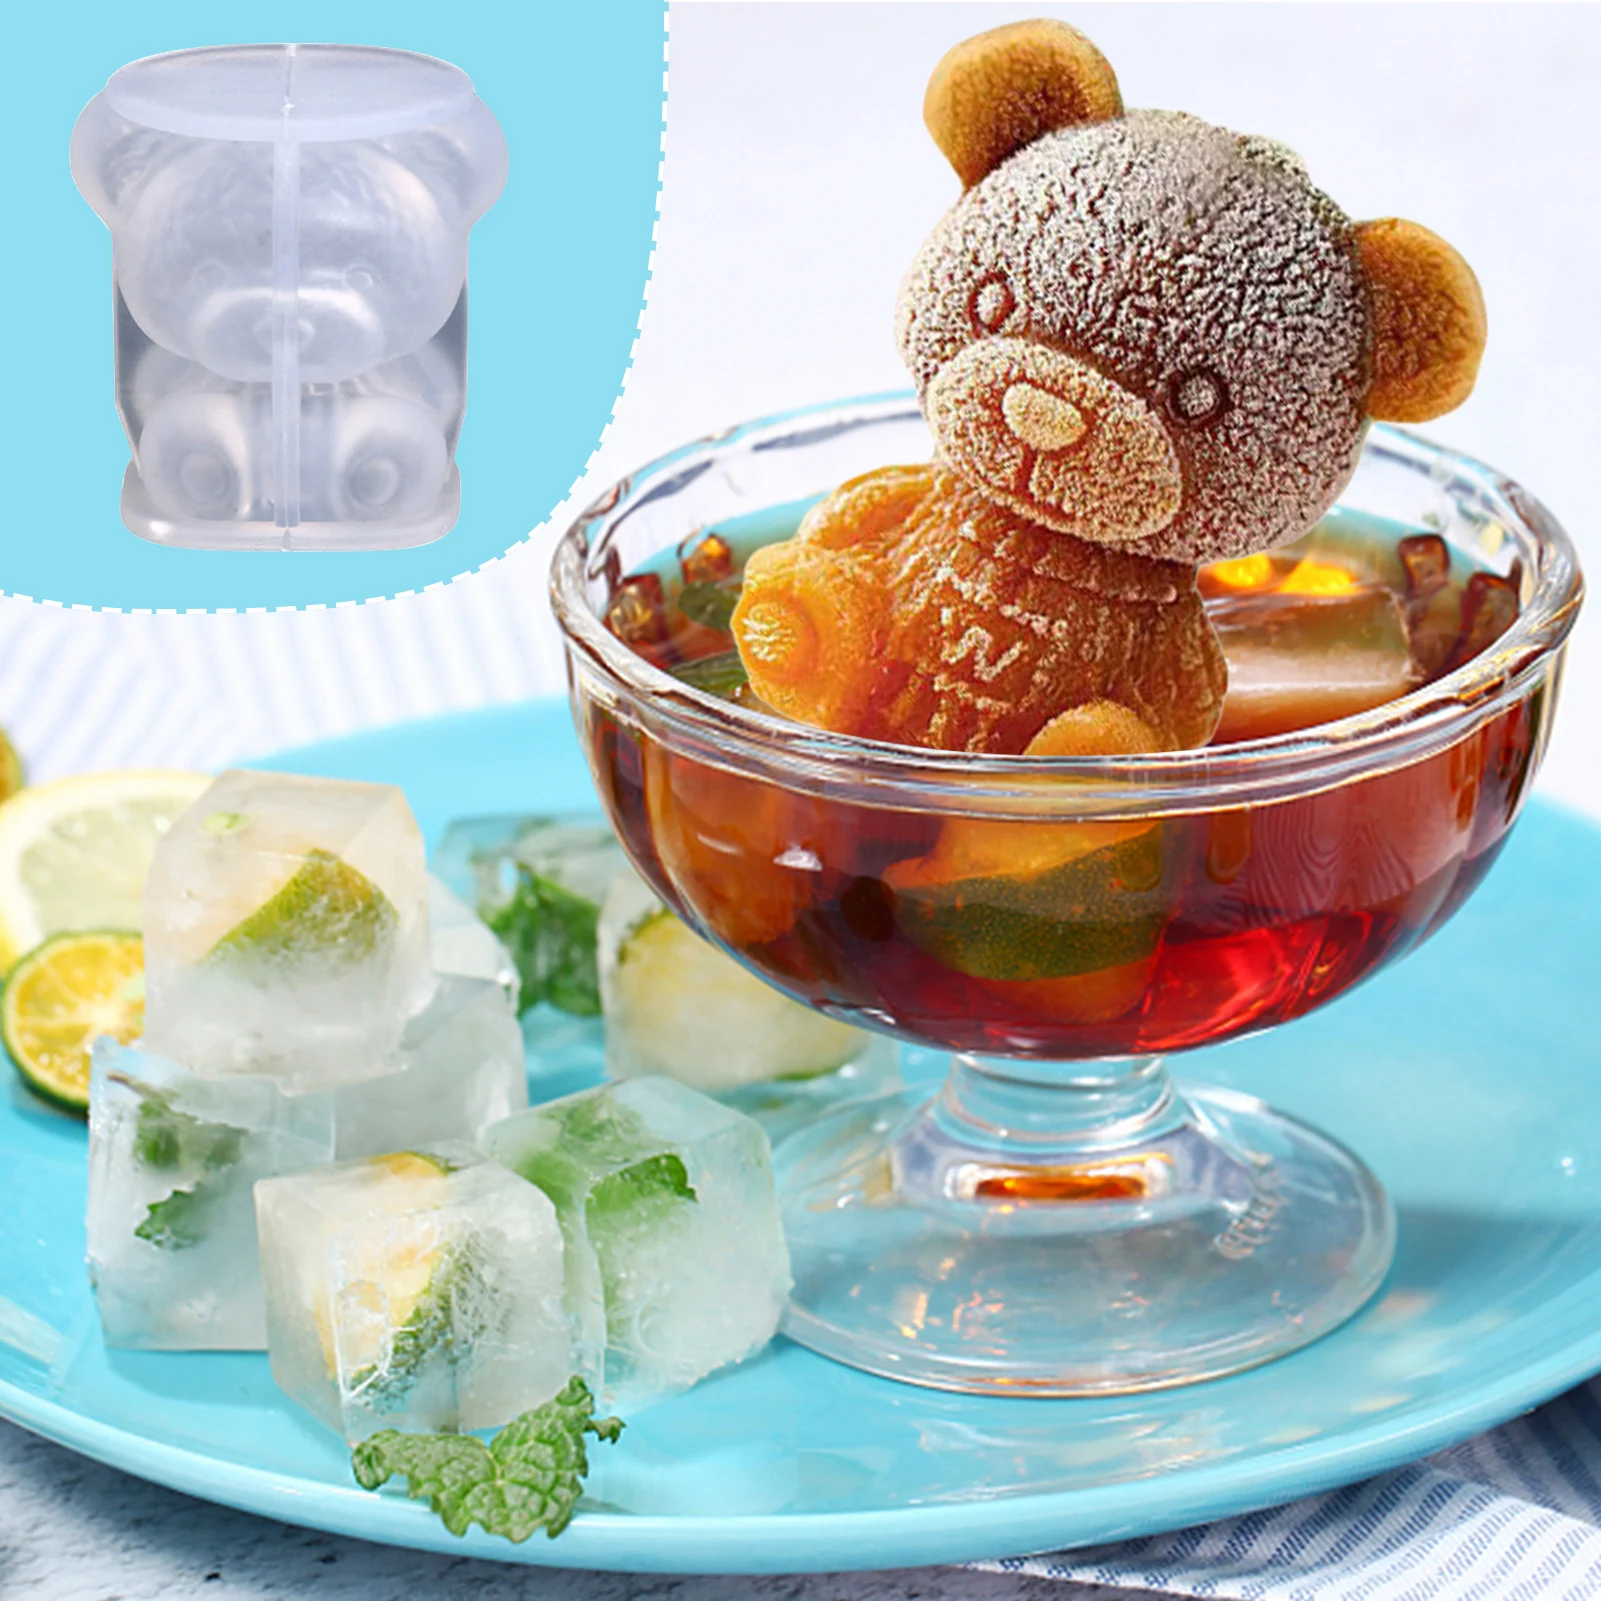 https://ae01.alicdn.com/kf/S8cc7ad4a6469447db656b11dcca8eeebX/3D-Teddy-Bear-Ice-Cube-Maker-Ice-Cube-Tray-Silicone-Mold-Chocolate-Ice-Mould-Whiskey-Wine.jpg